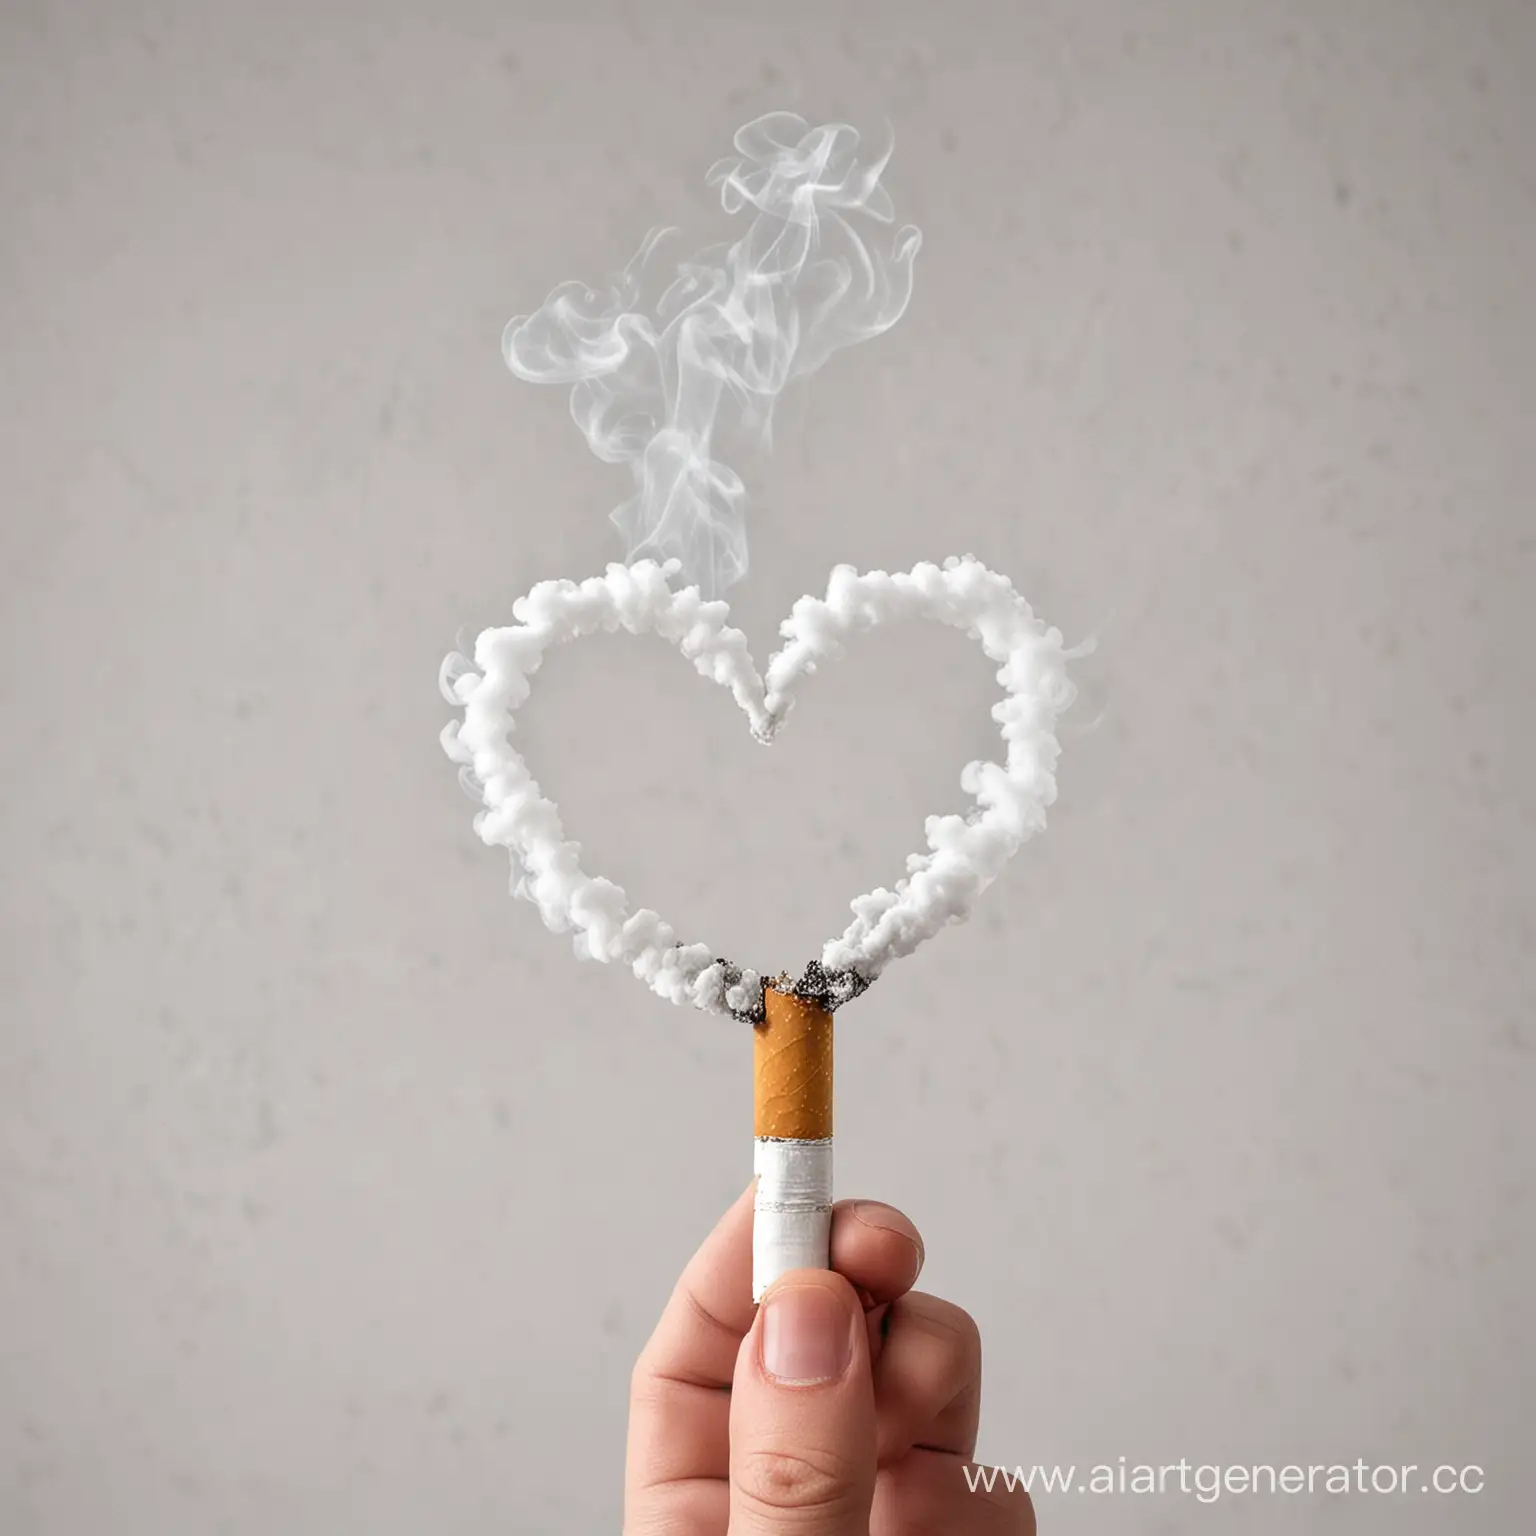 Innovative-Smoke-Art-HeartShaped-Smoke-from-a-Cigarette-on-White-Background